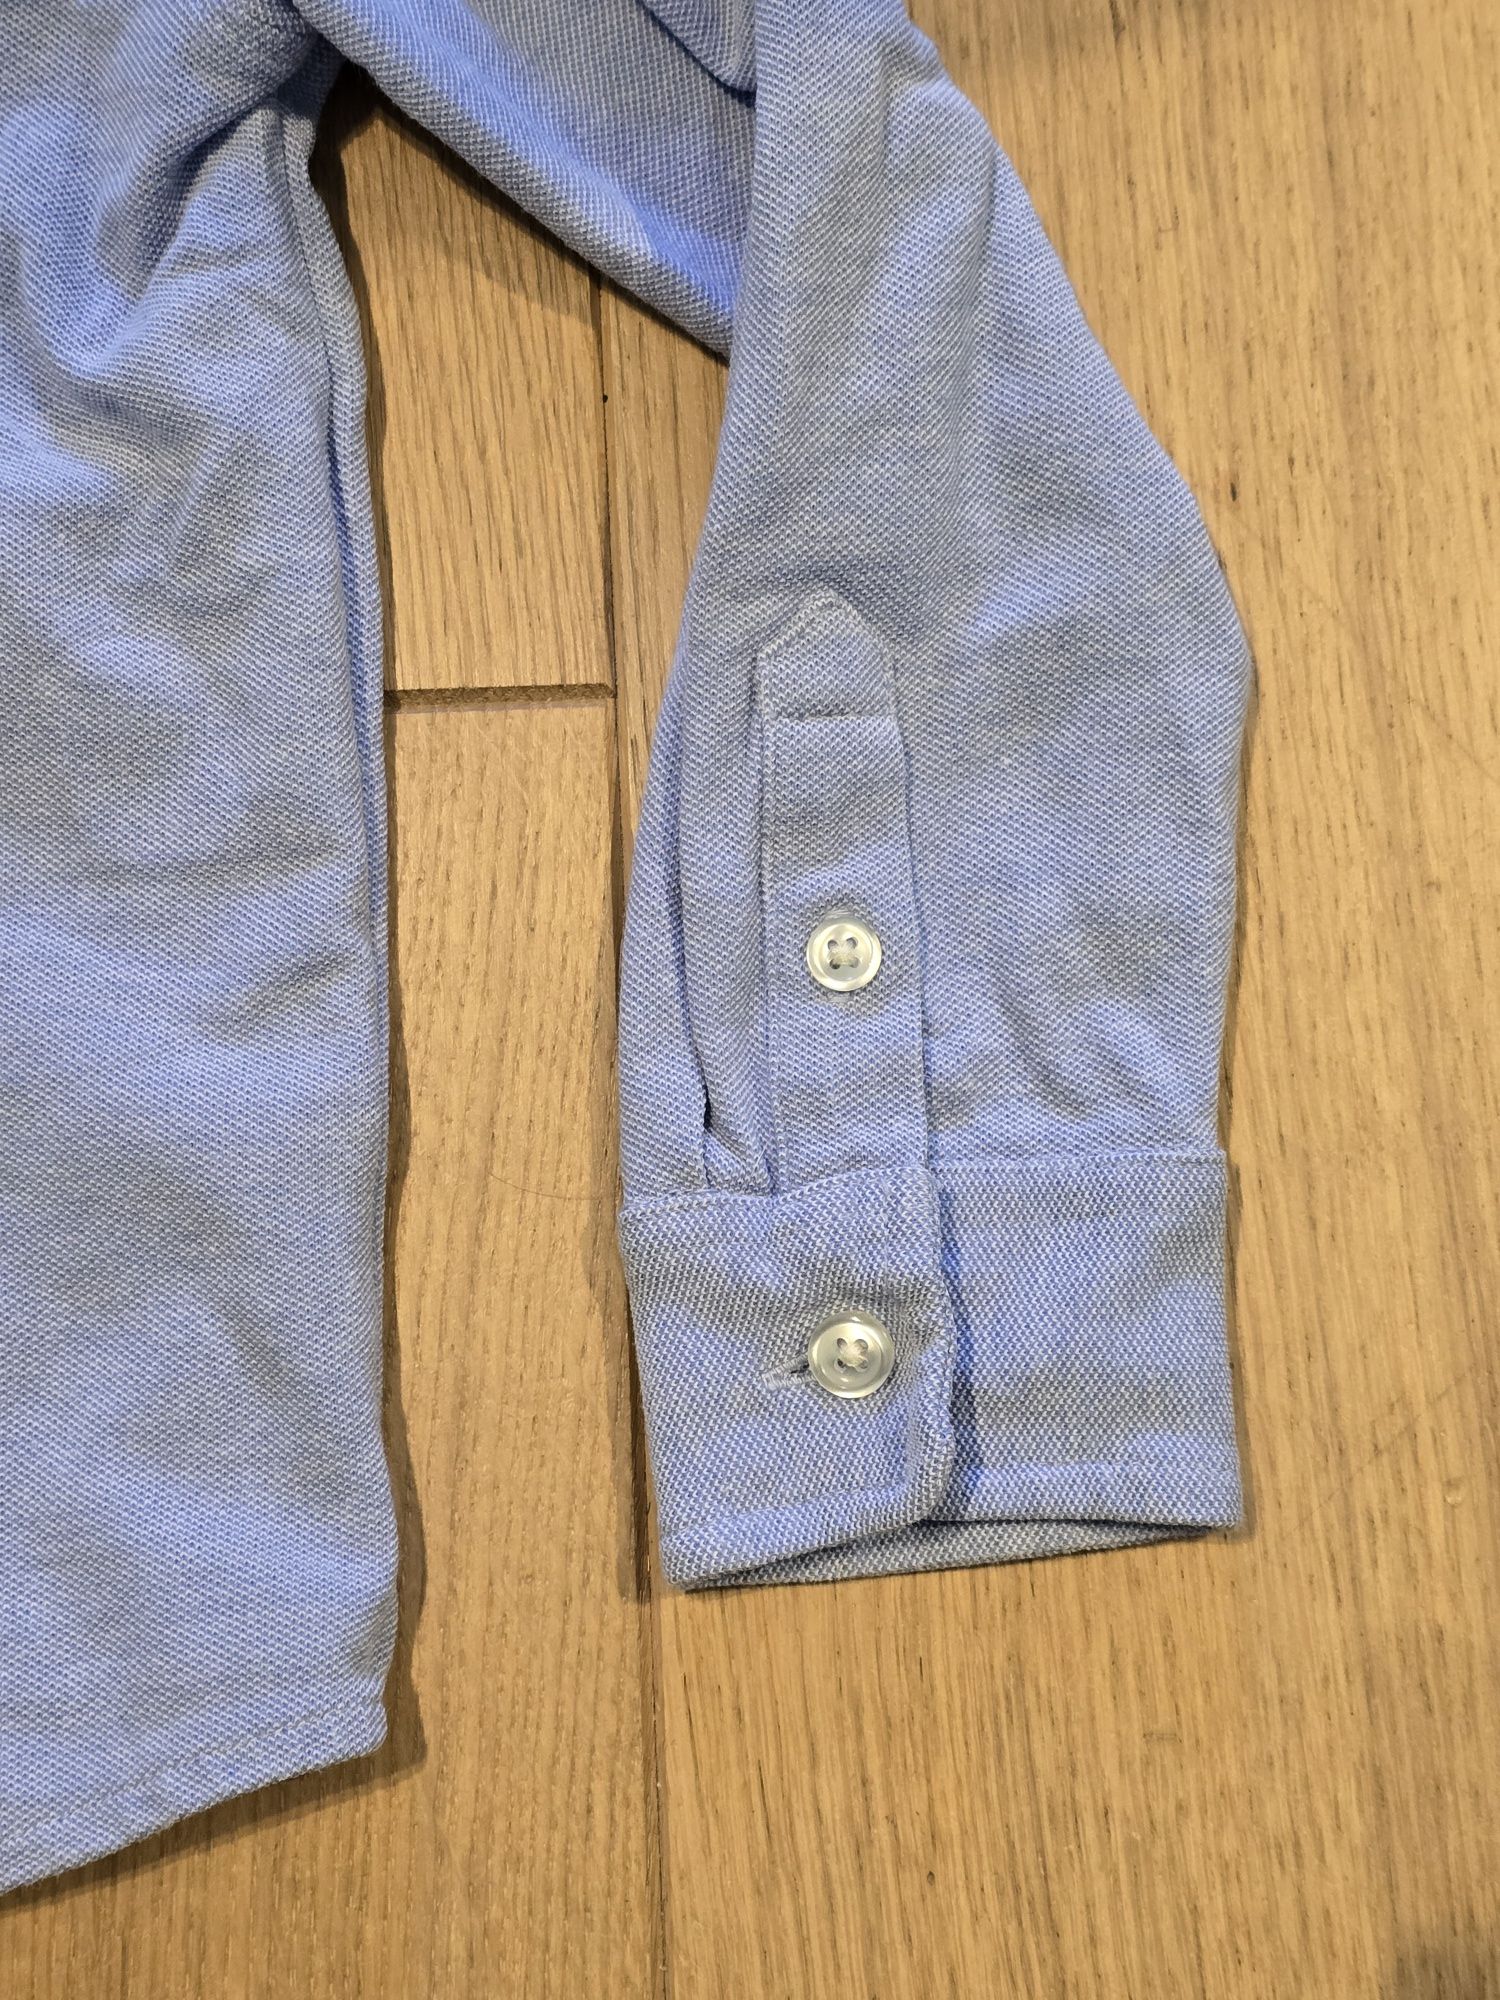 Polo Ralph Lauren koszula dziecięca r. 110